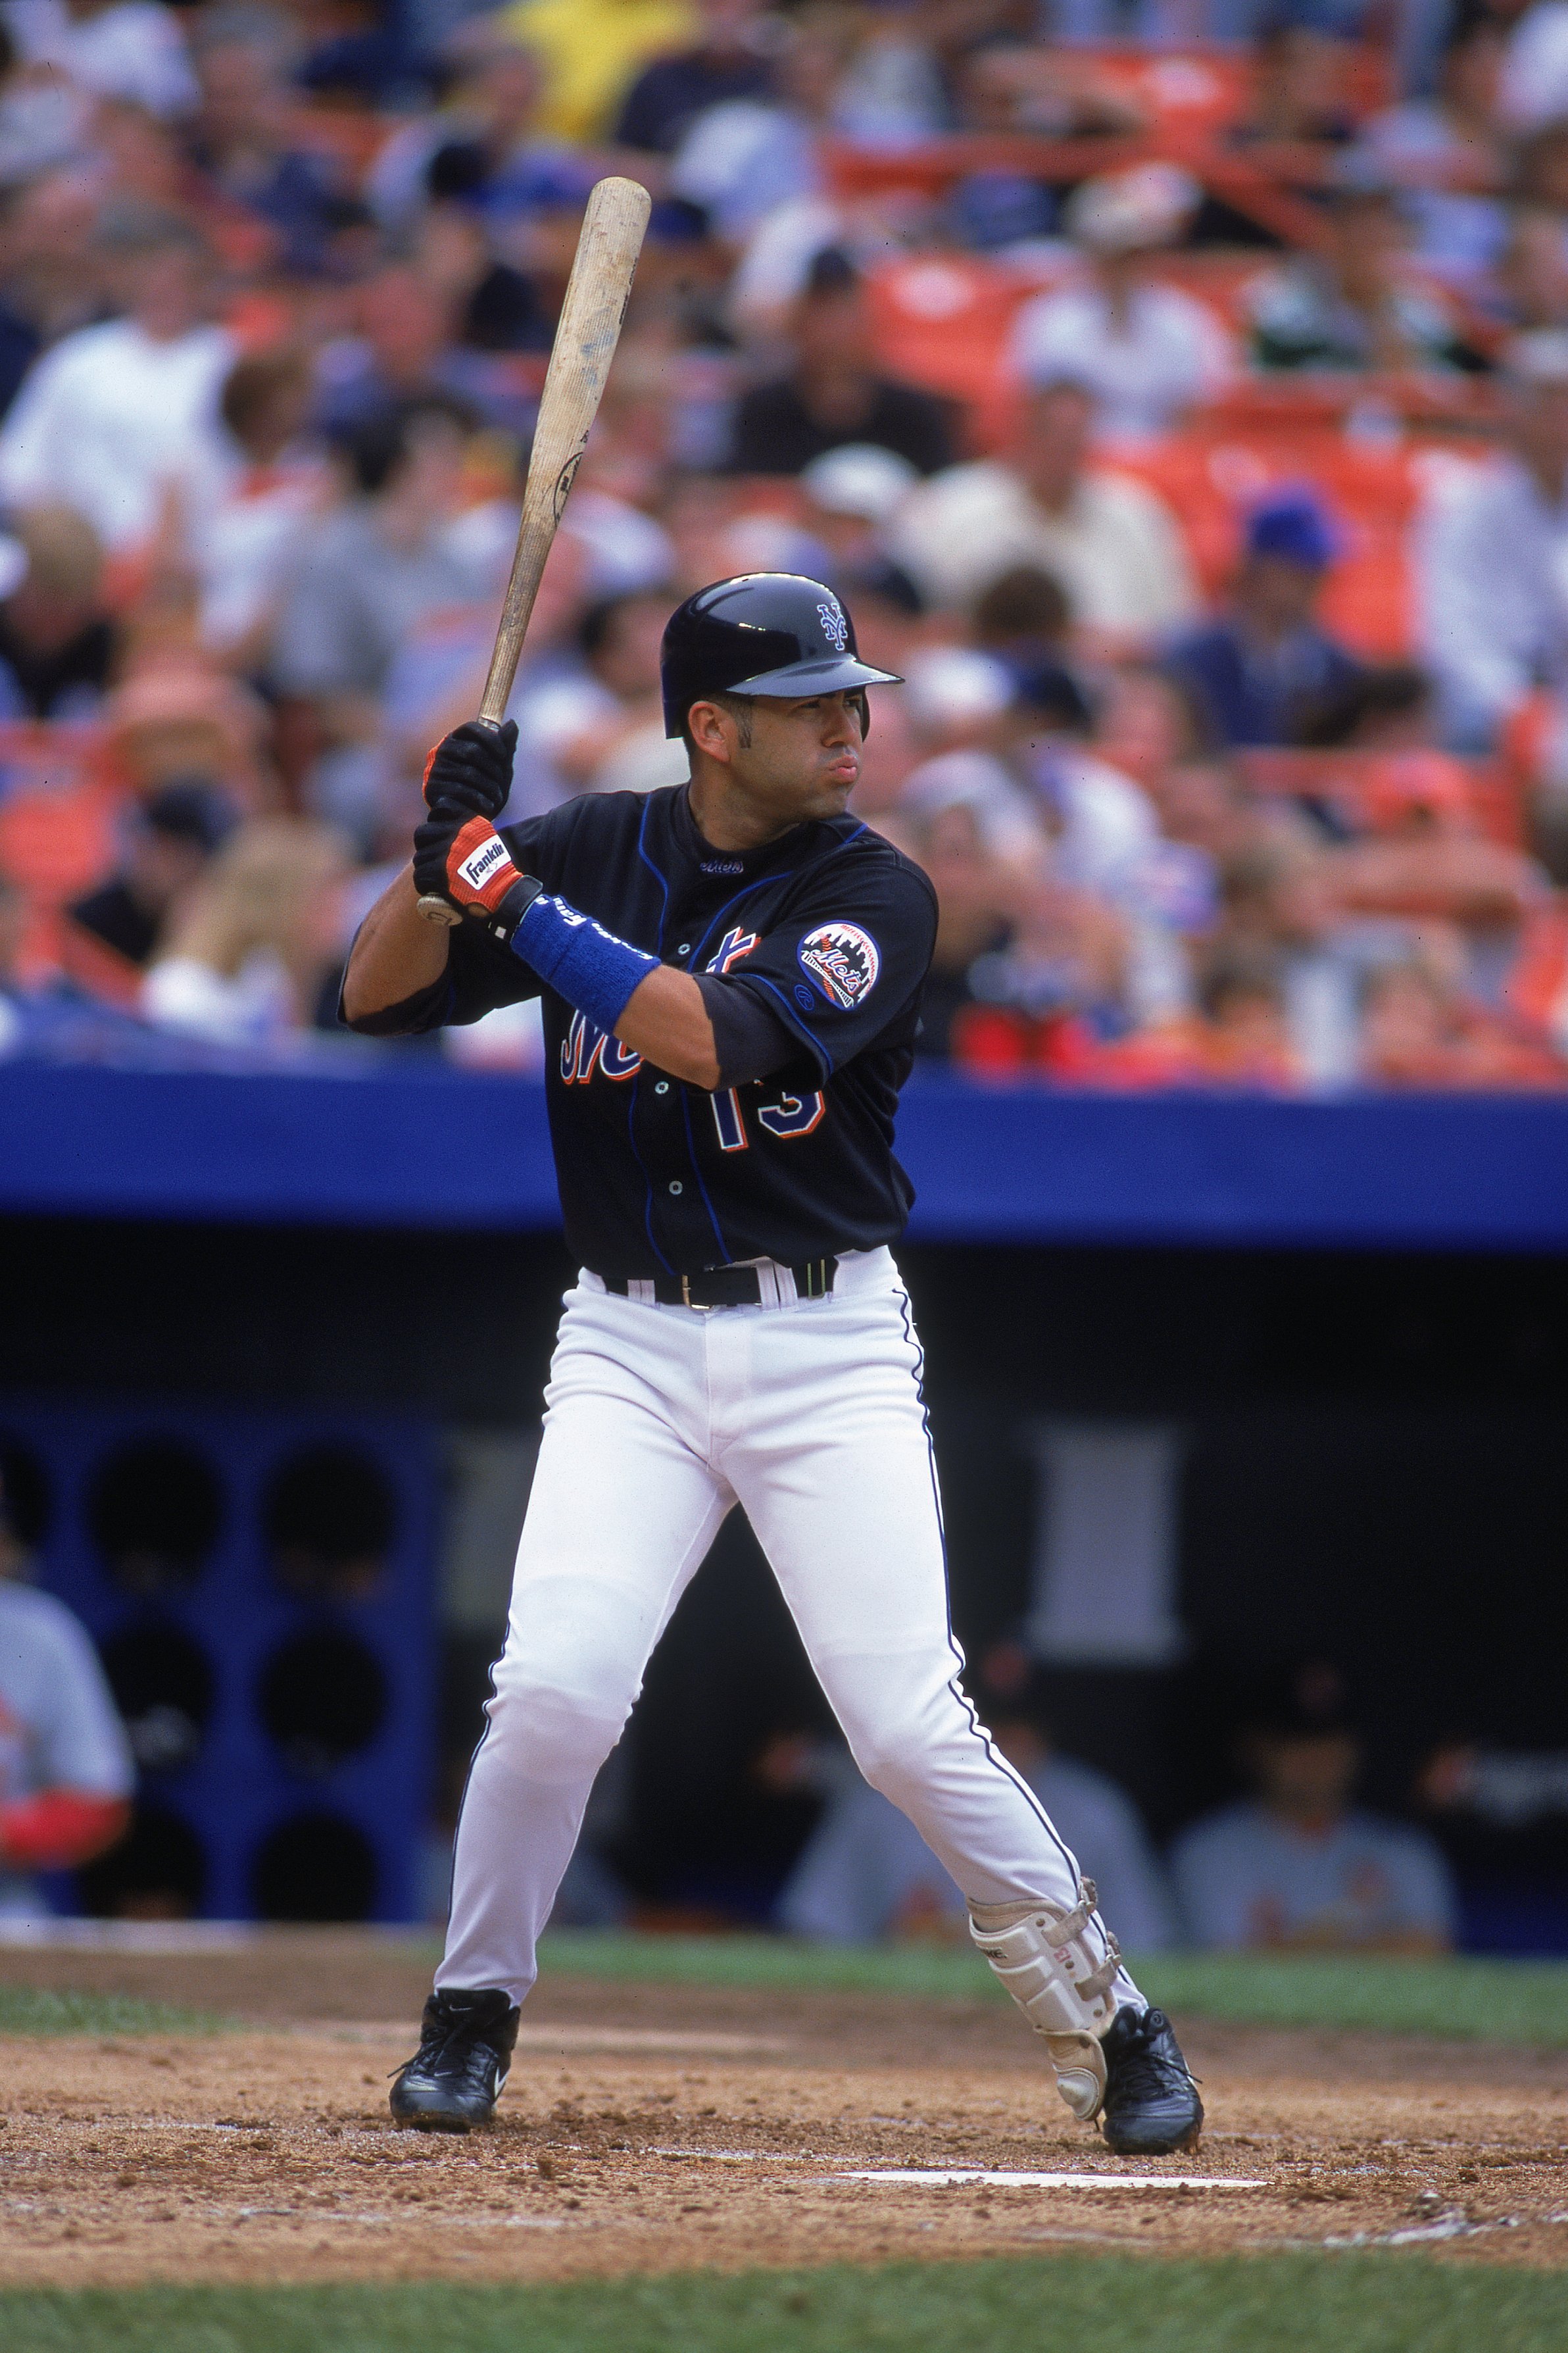 Lot Detail - 2000 Edgardo Alfonzo New York Mets World Series Game-Used  Black Alternate Jersey (Subway Series)